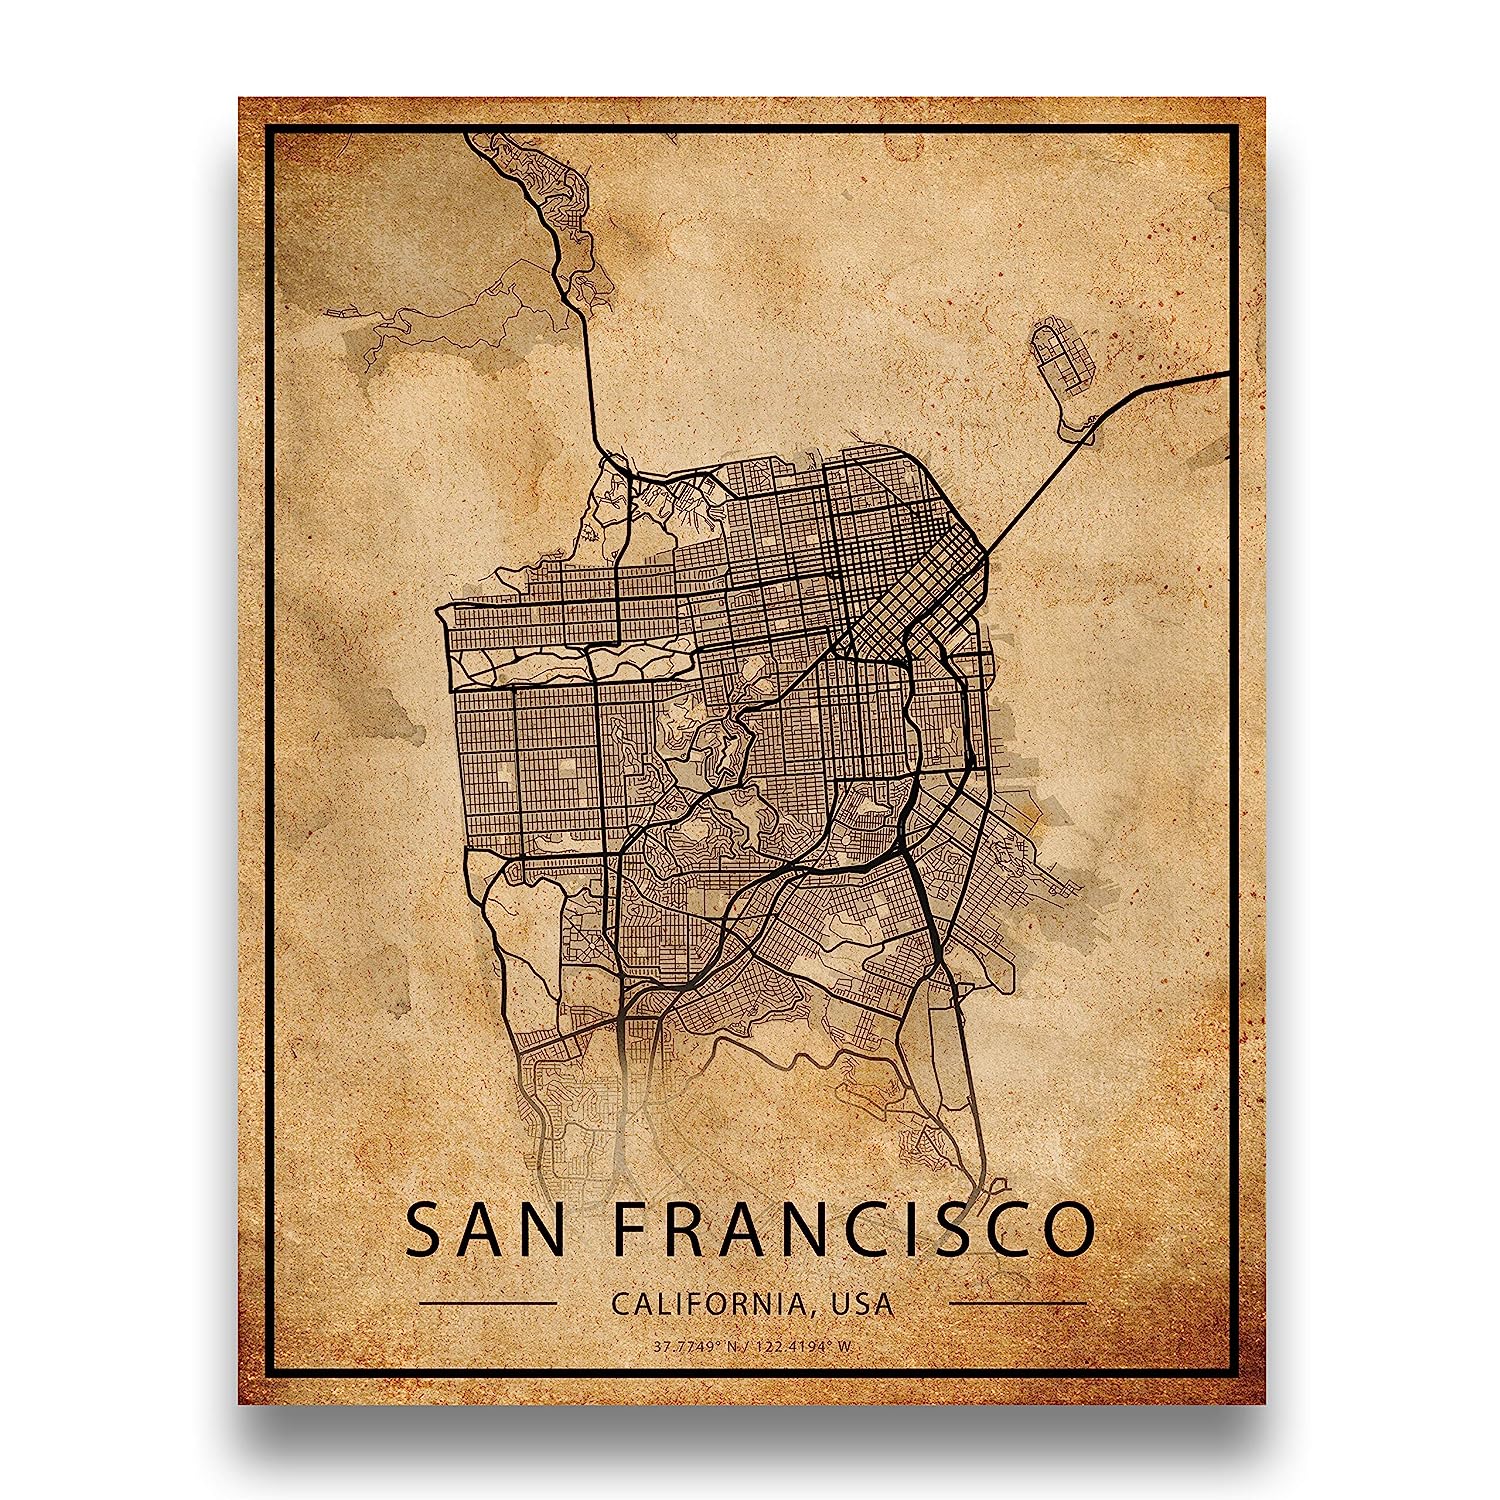 San Francisco Map Vintage Style Poster Print | 11x14 [...]